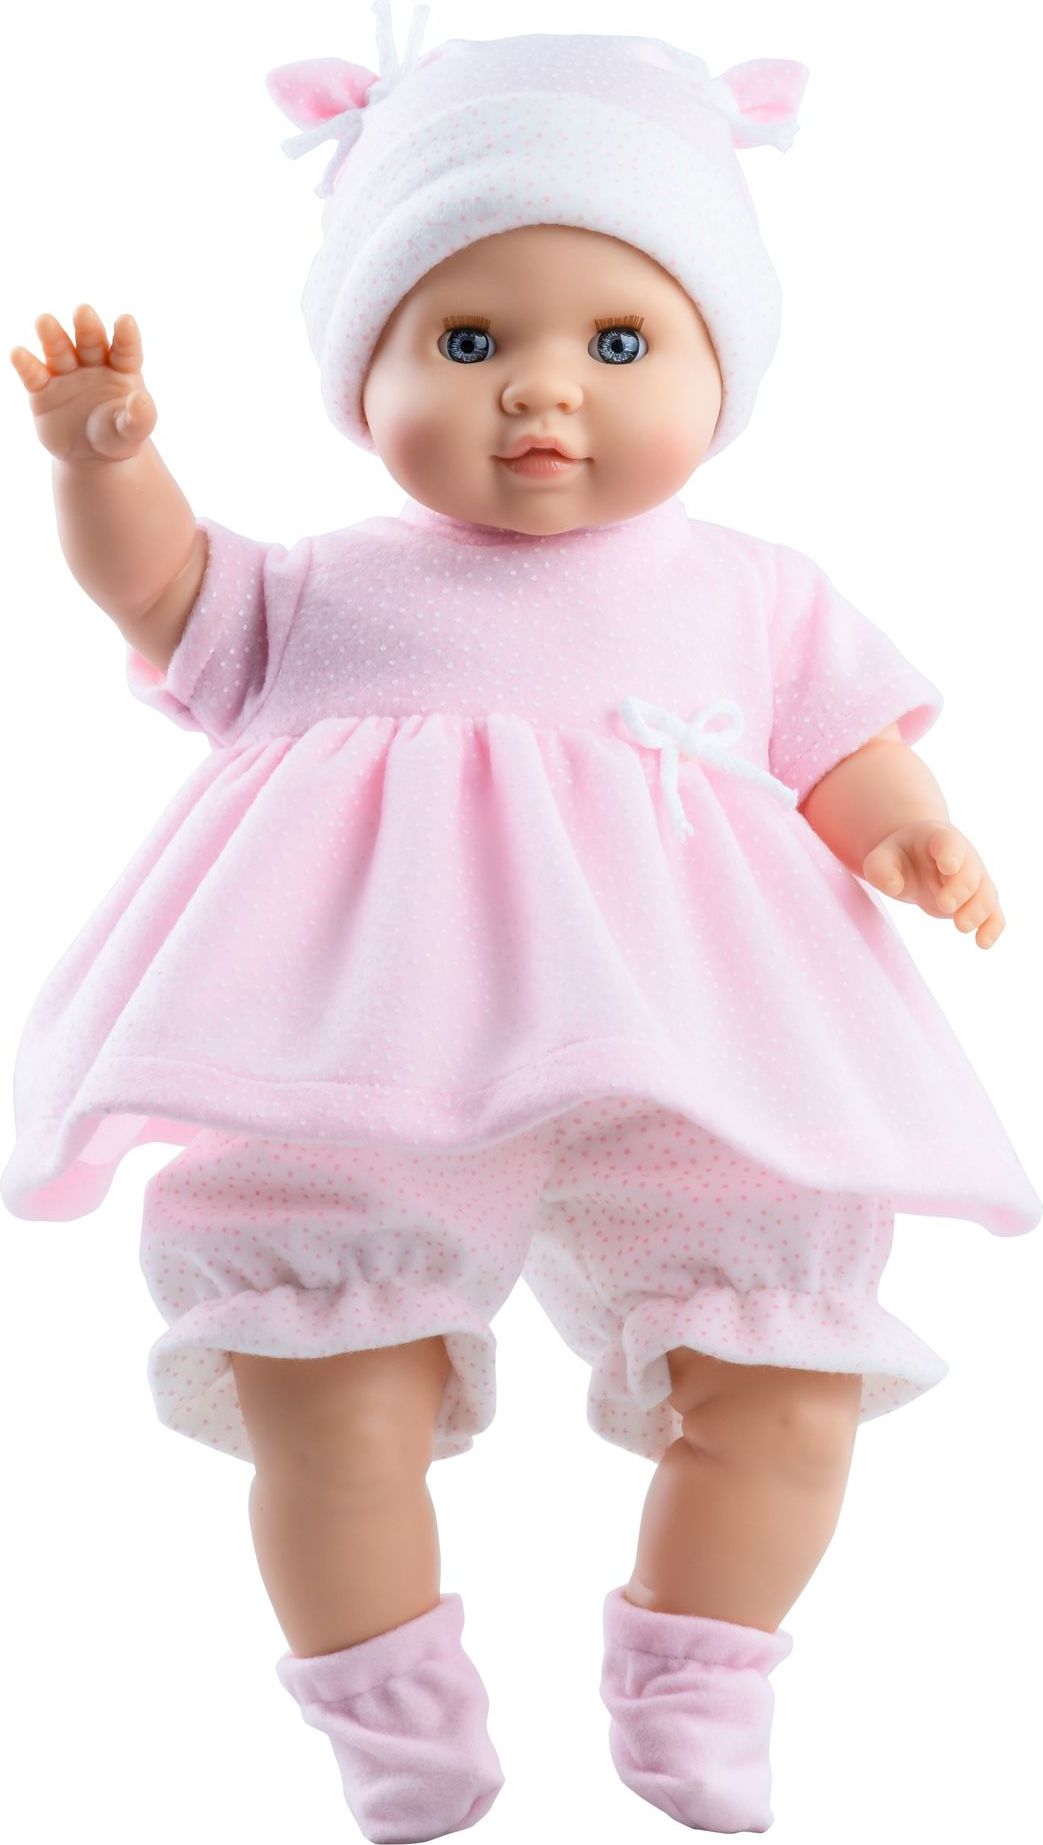 Realistické miminko - holčička  Amy v růžových šatech od firmy Paola Reina - obrázek 1